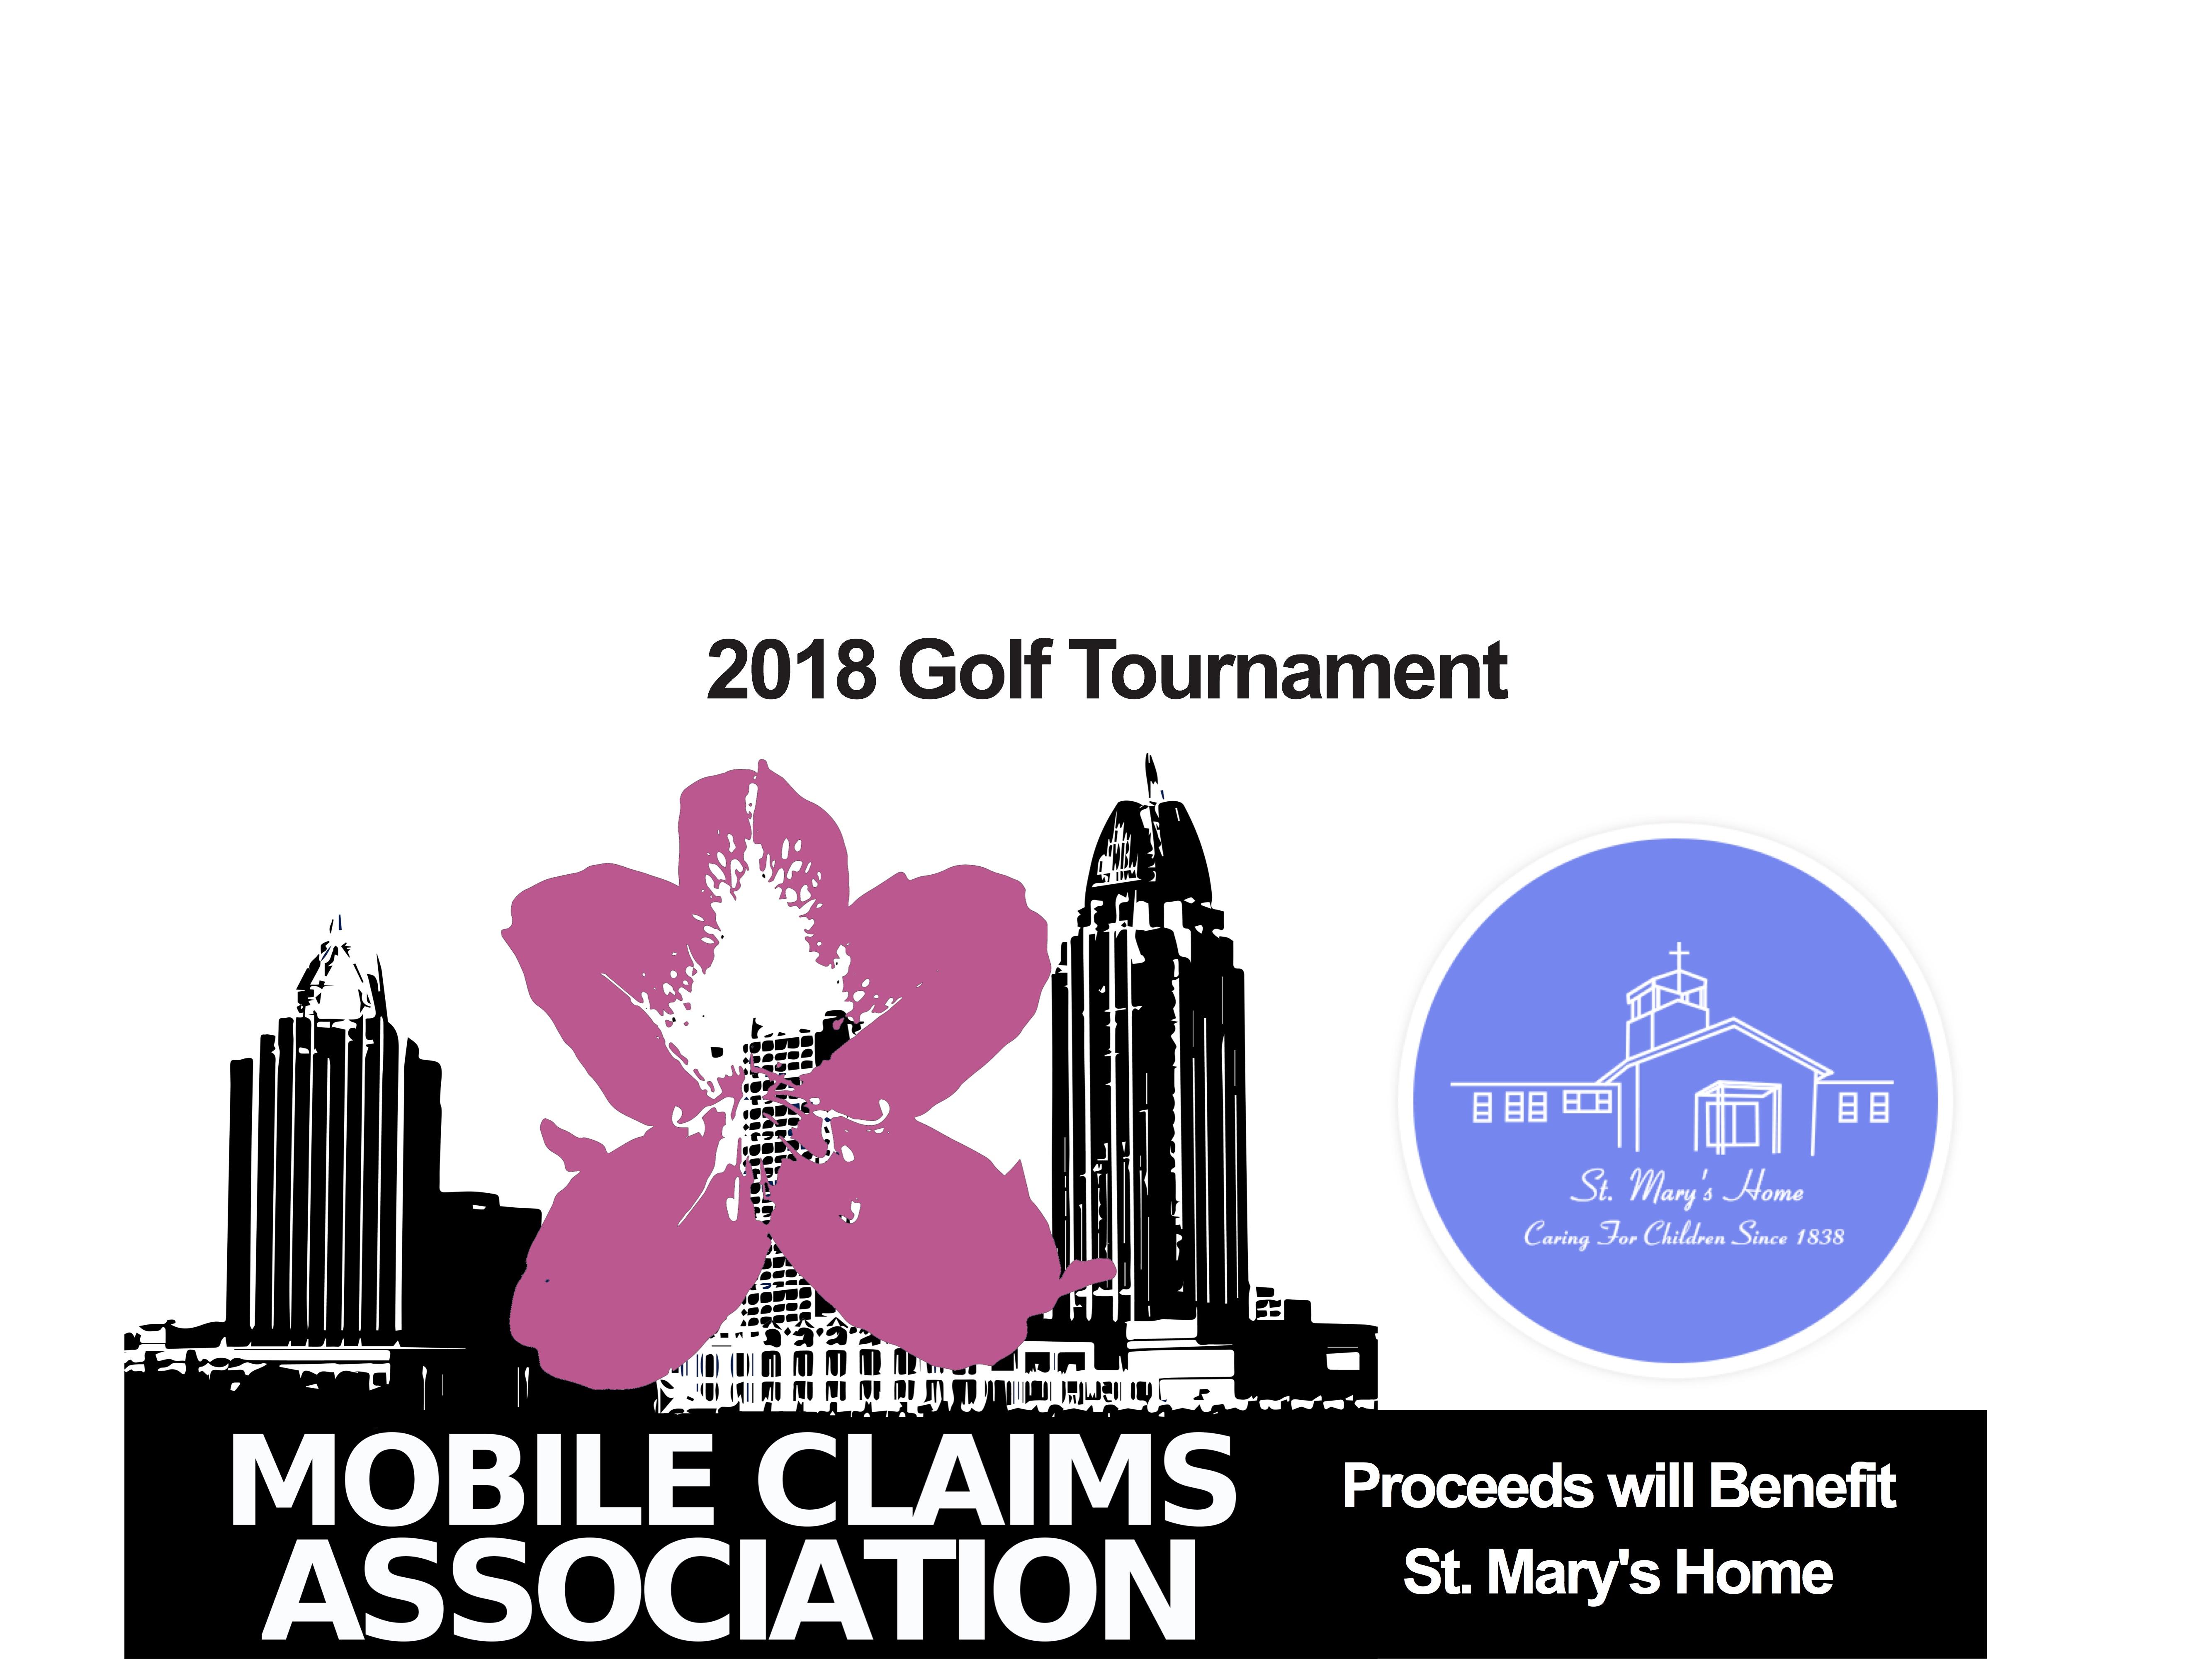 Mobile Claims Association 2018 Golf Tournament